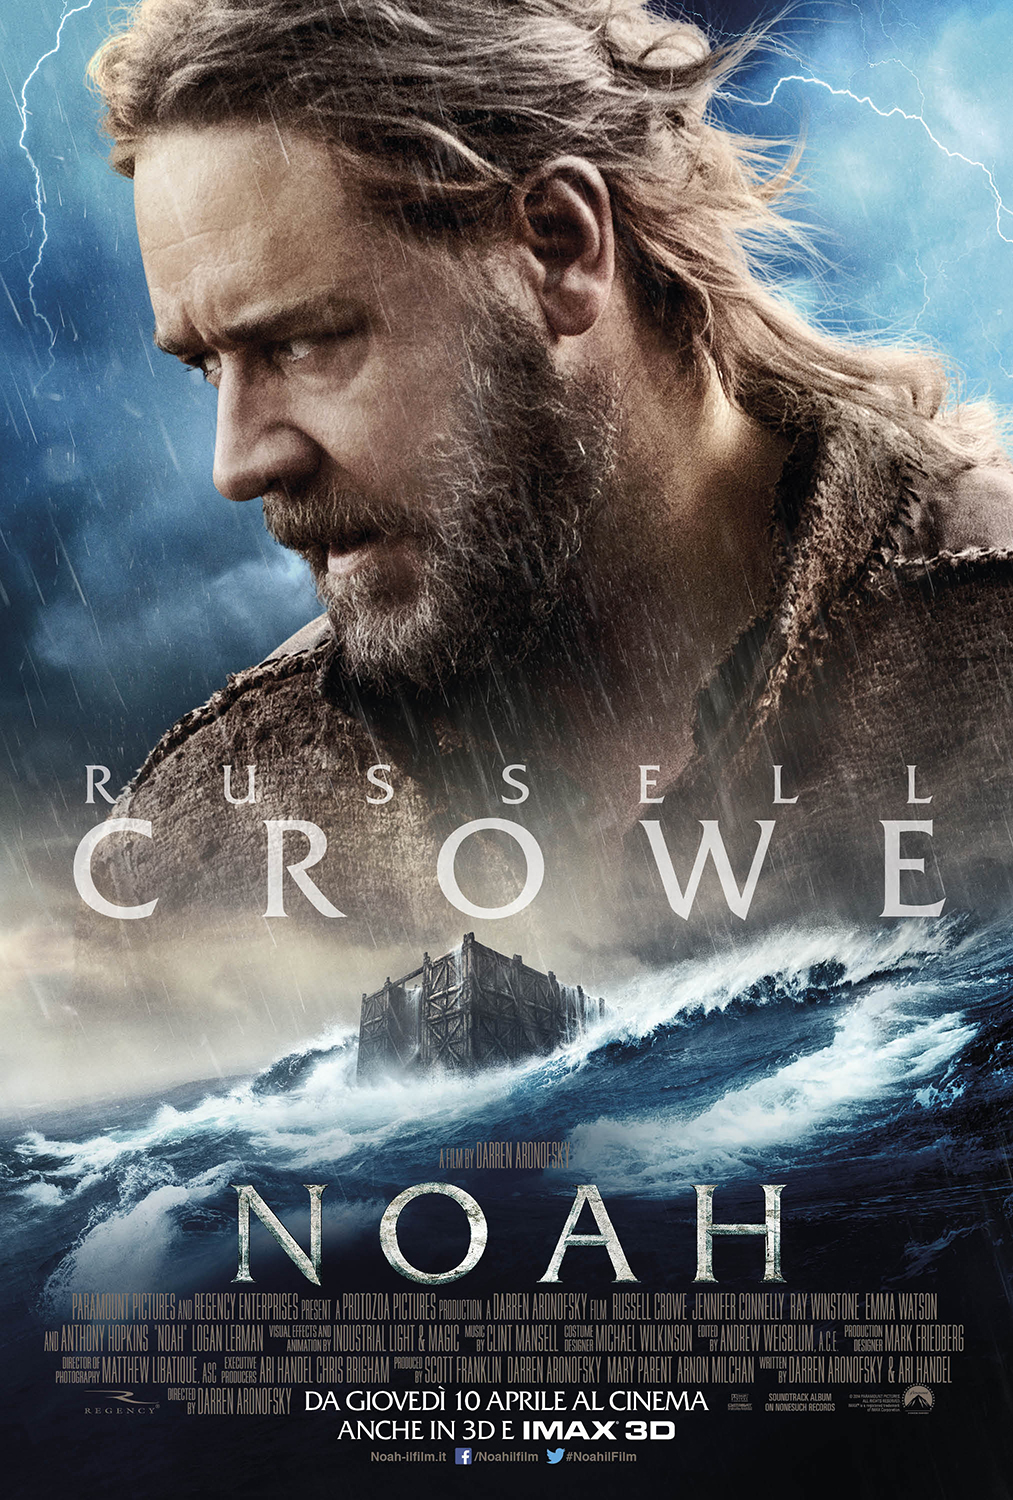 Noah character poster Crowe